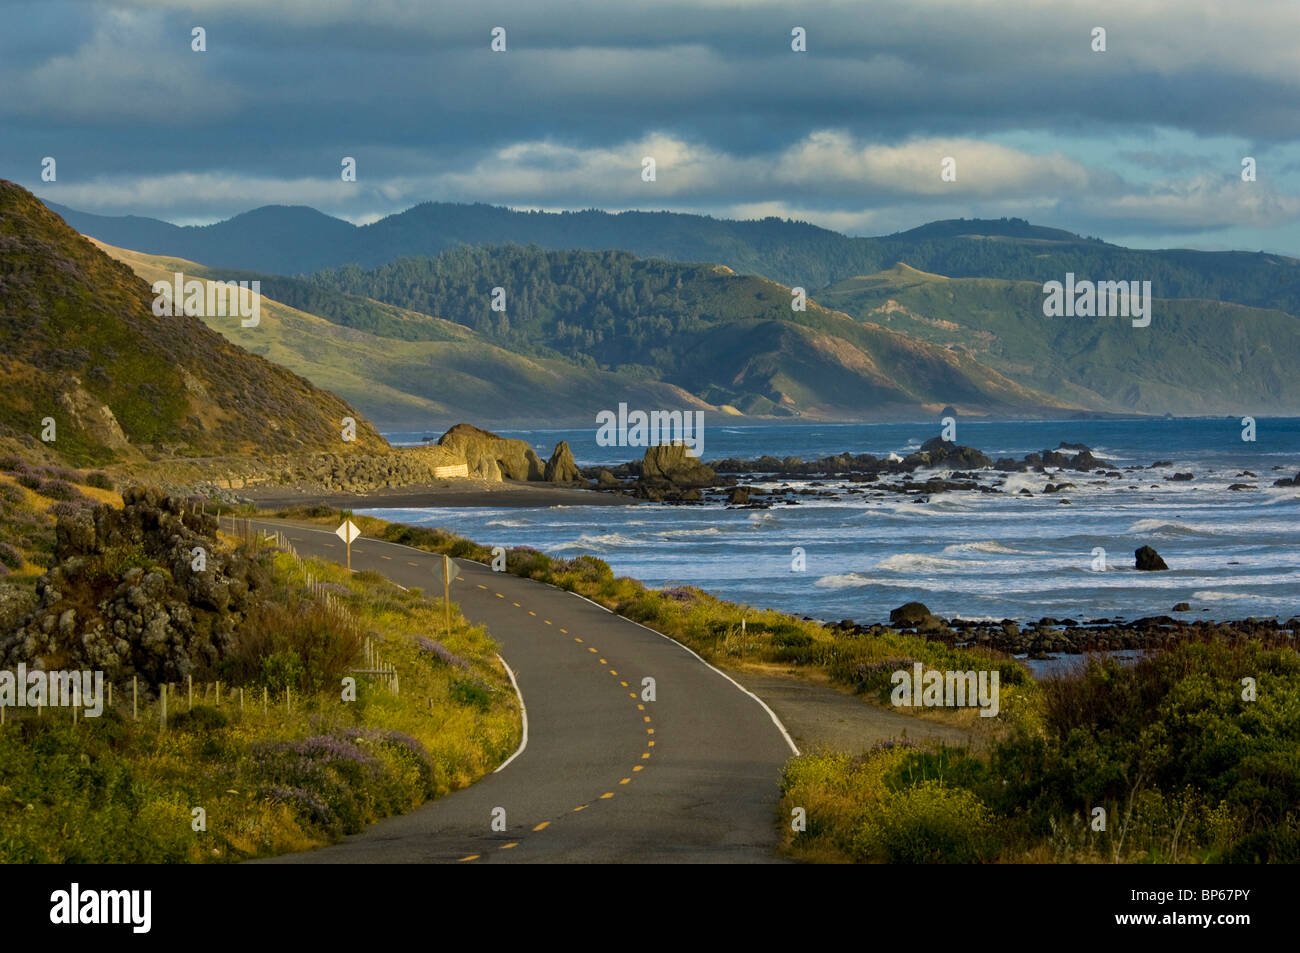 The Mattole Road along the ocean at the Lost Coast near Cape Mendocino, Humboldt County, California Stock Photo